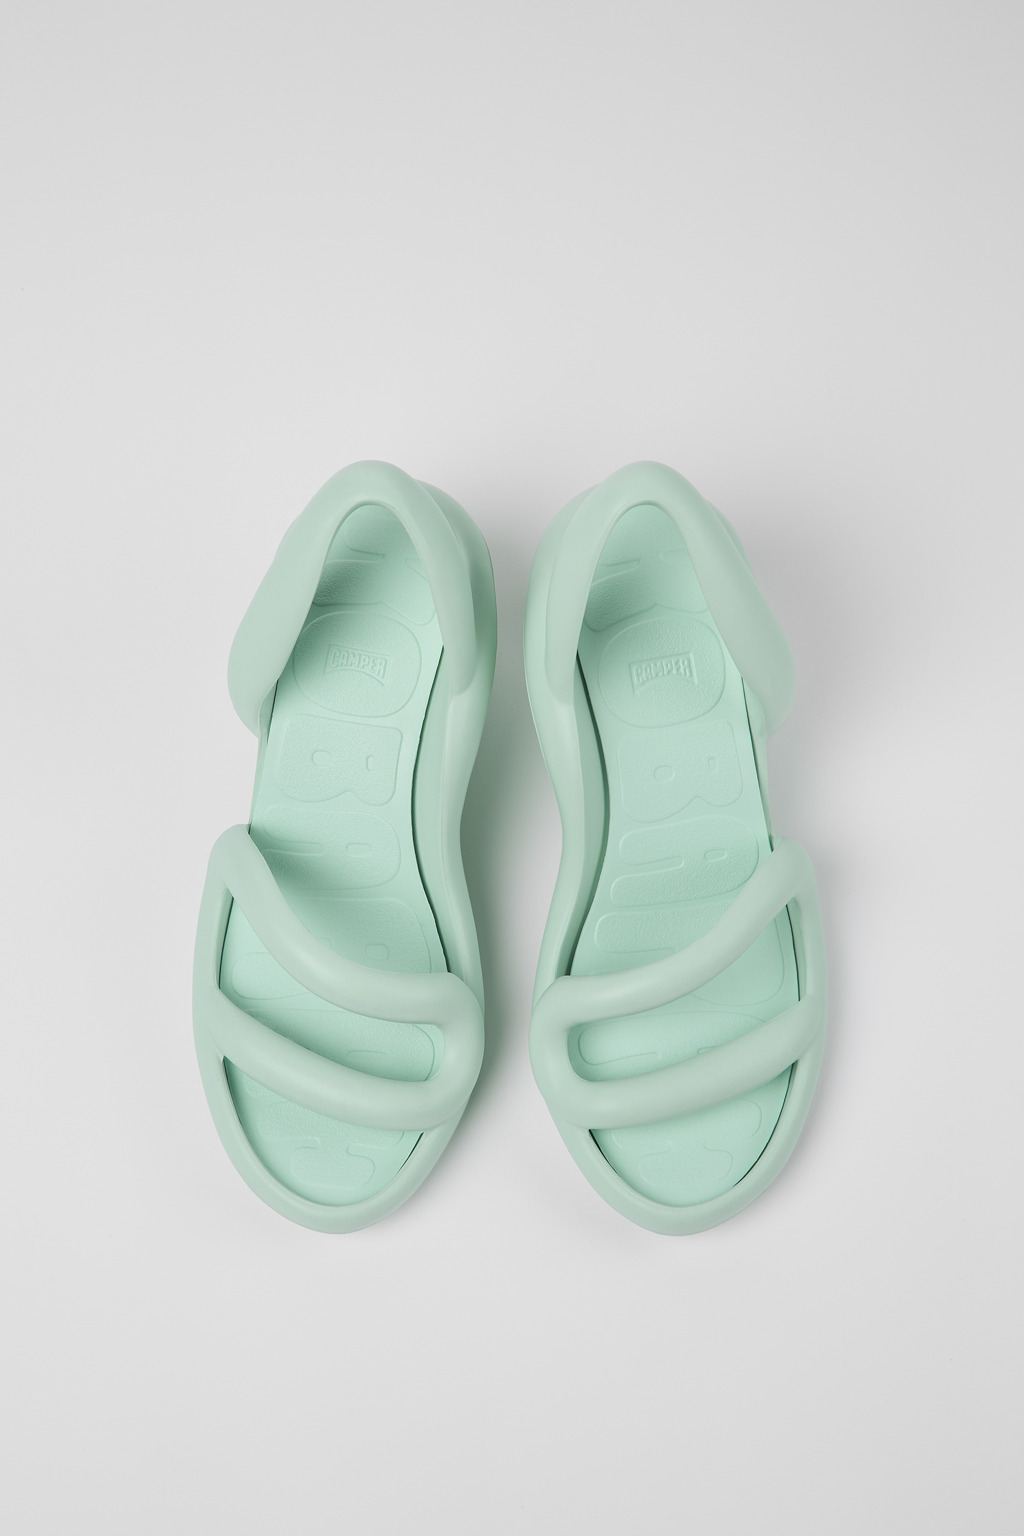 KOBARAH Blue Sandals for Women - Fall/Winter collection - Camper USA